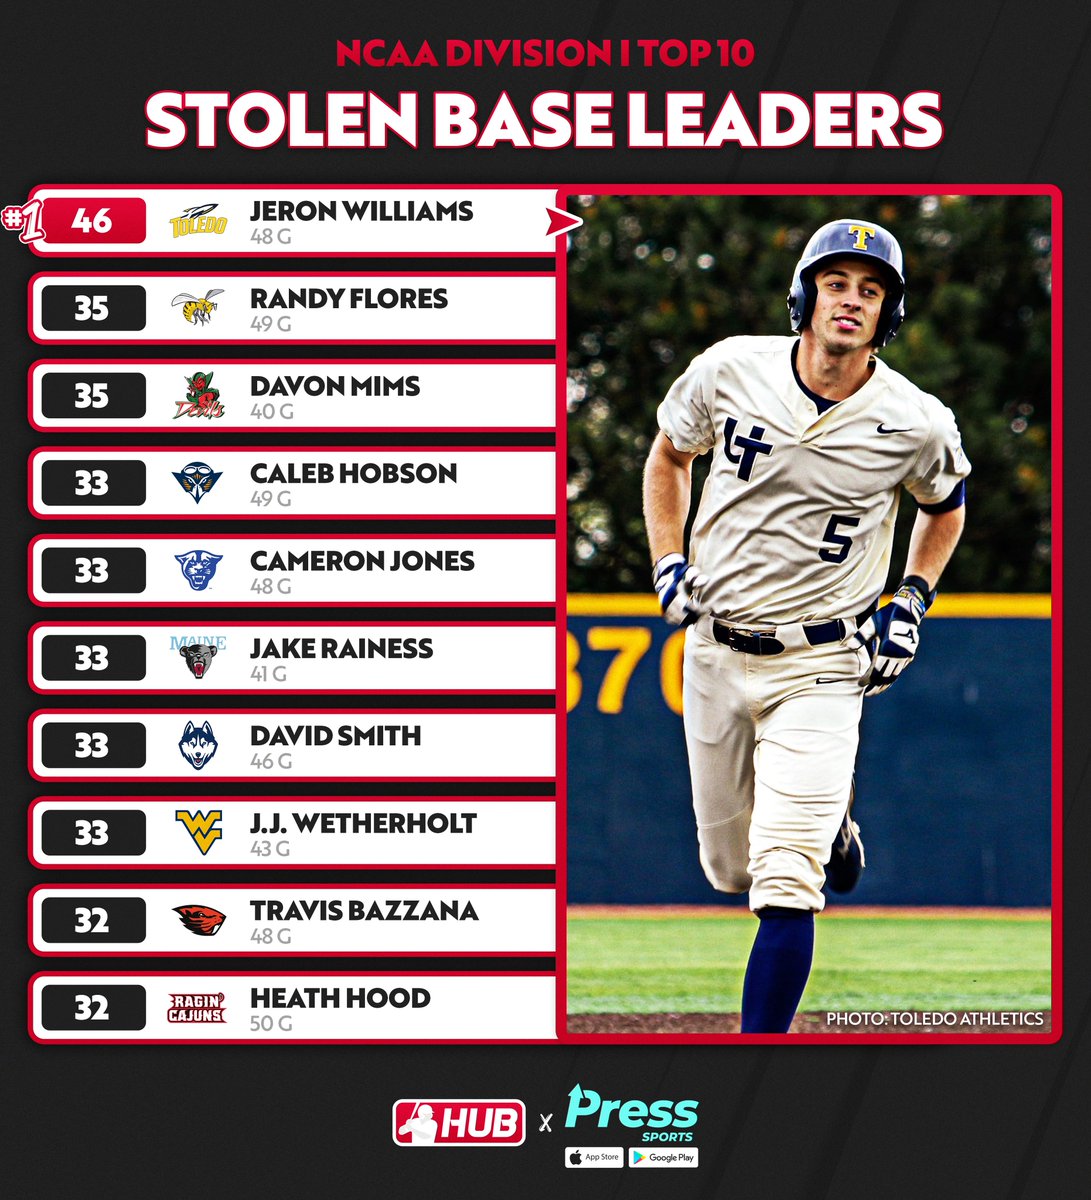 College Baseball Hub on Twitter "D1 stolen base leaders through games